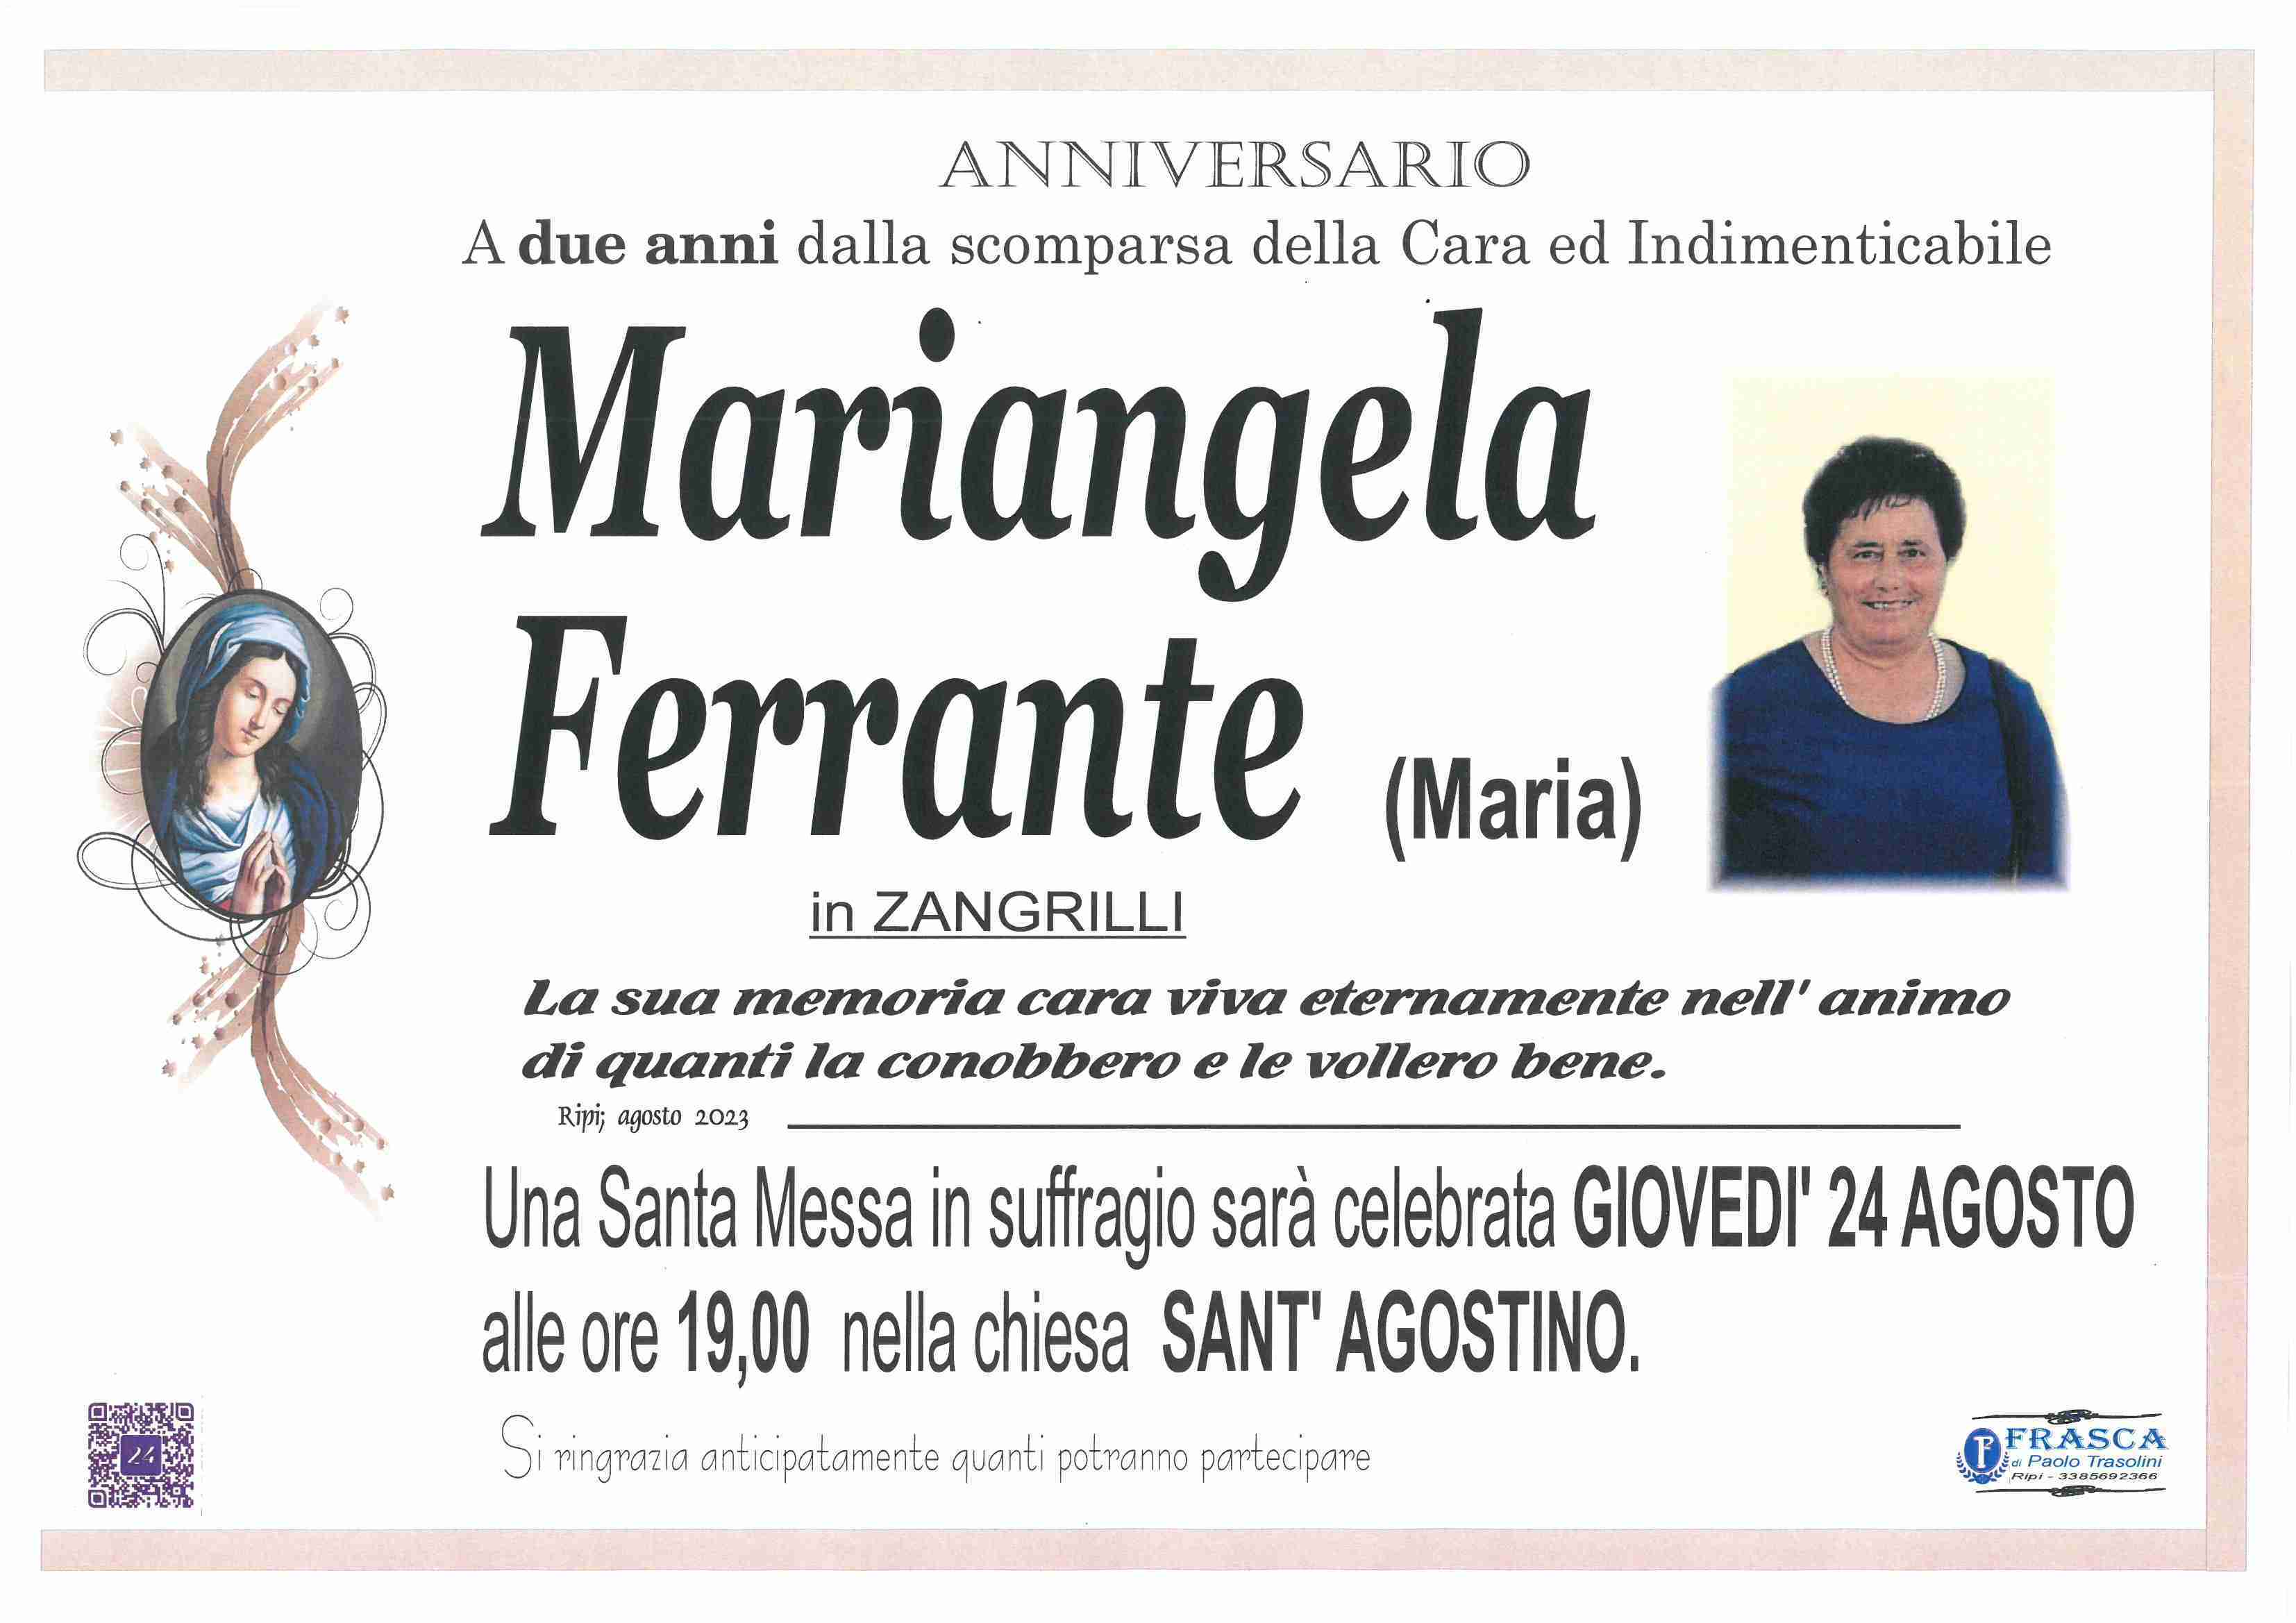 Mariangela Ferrante